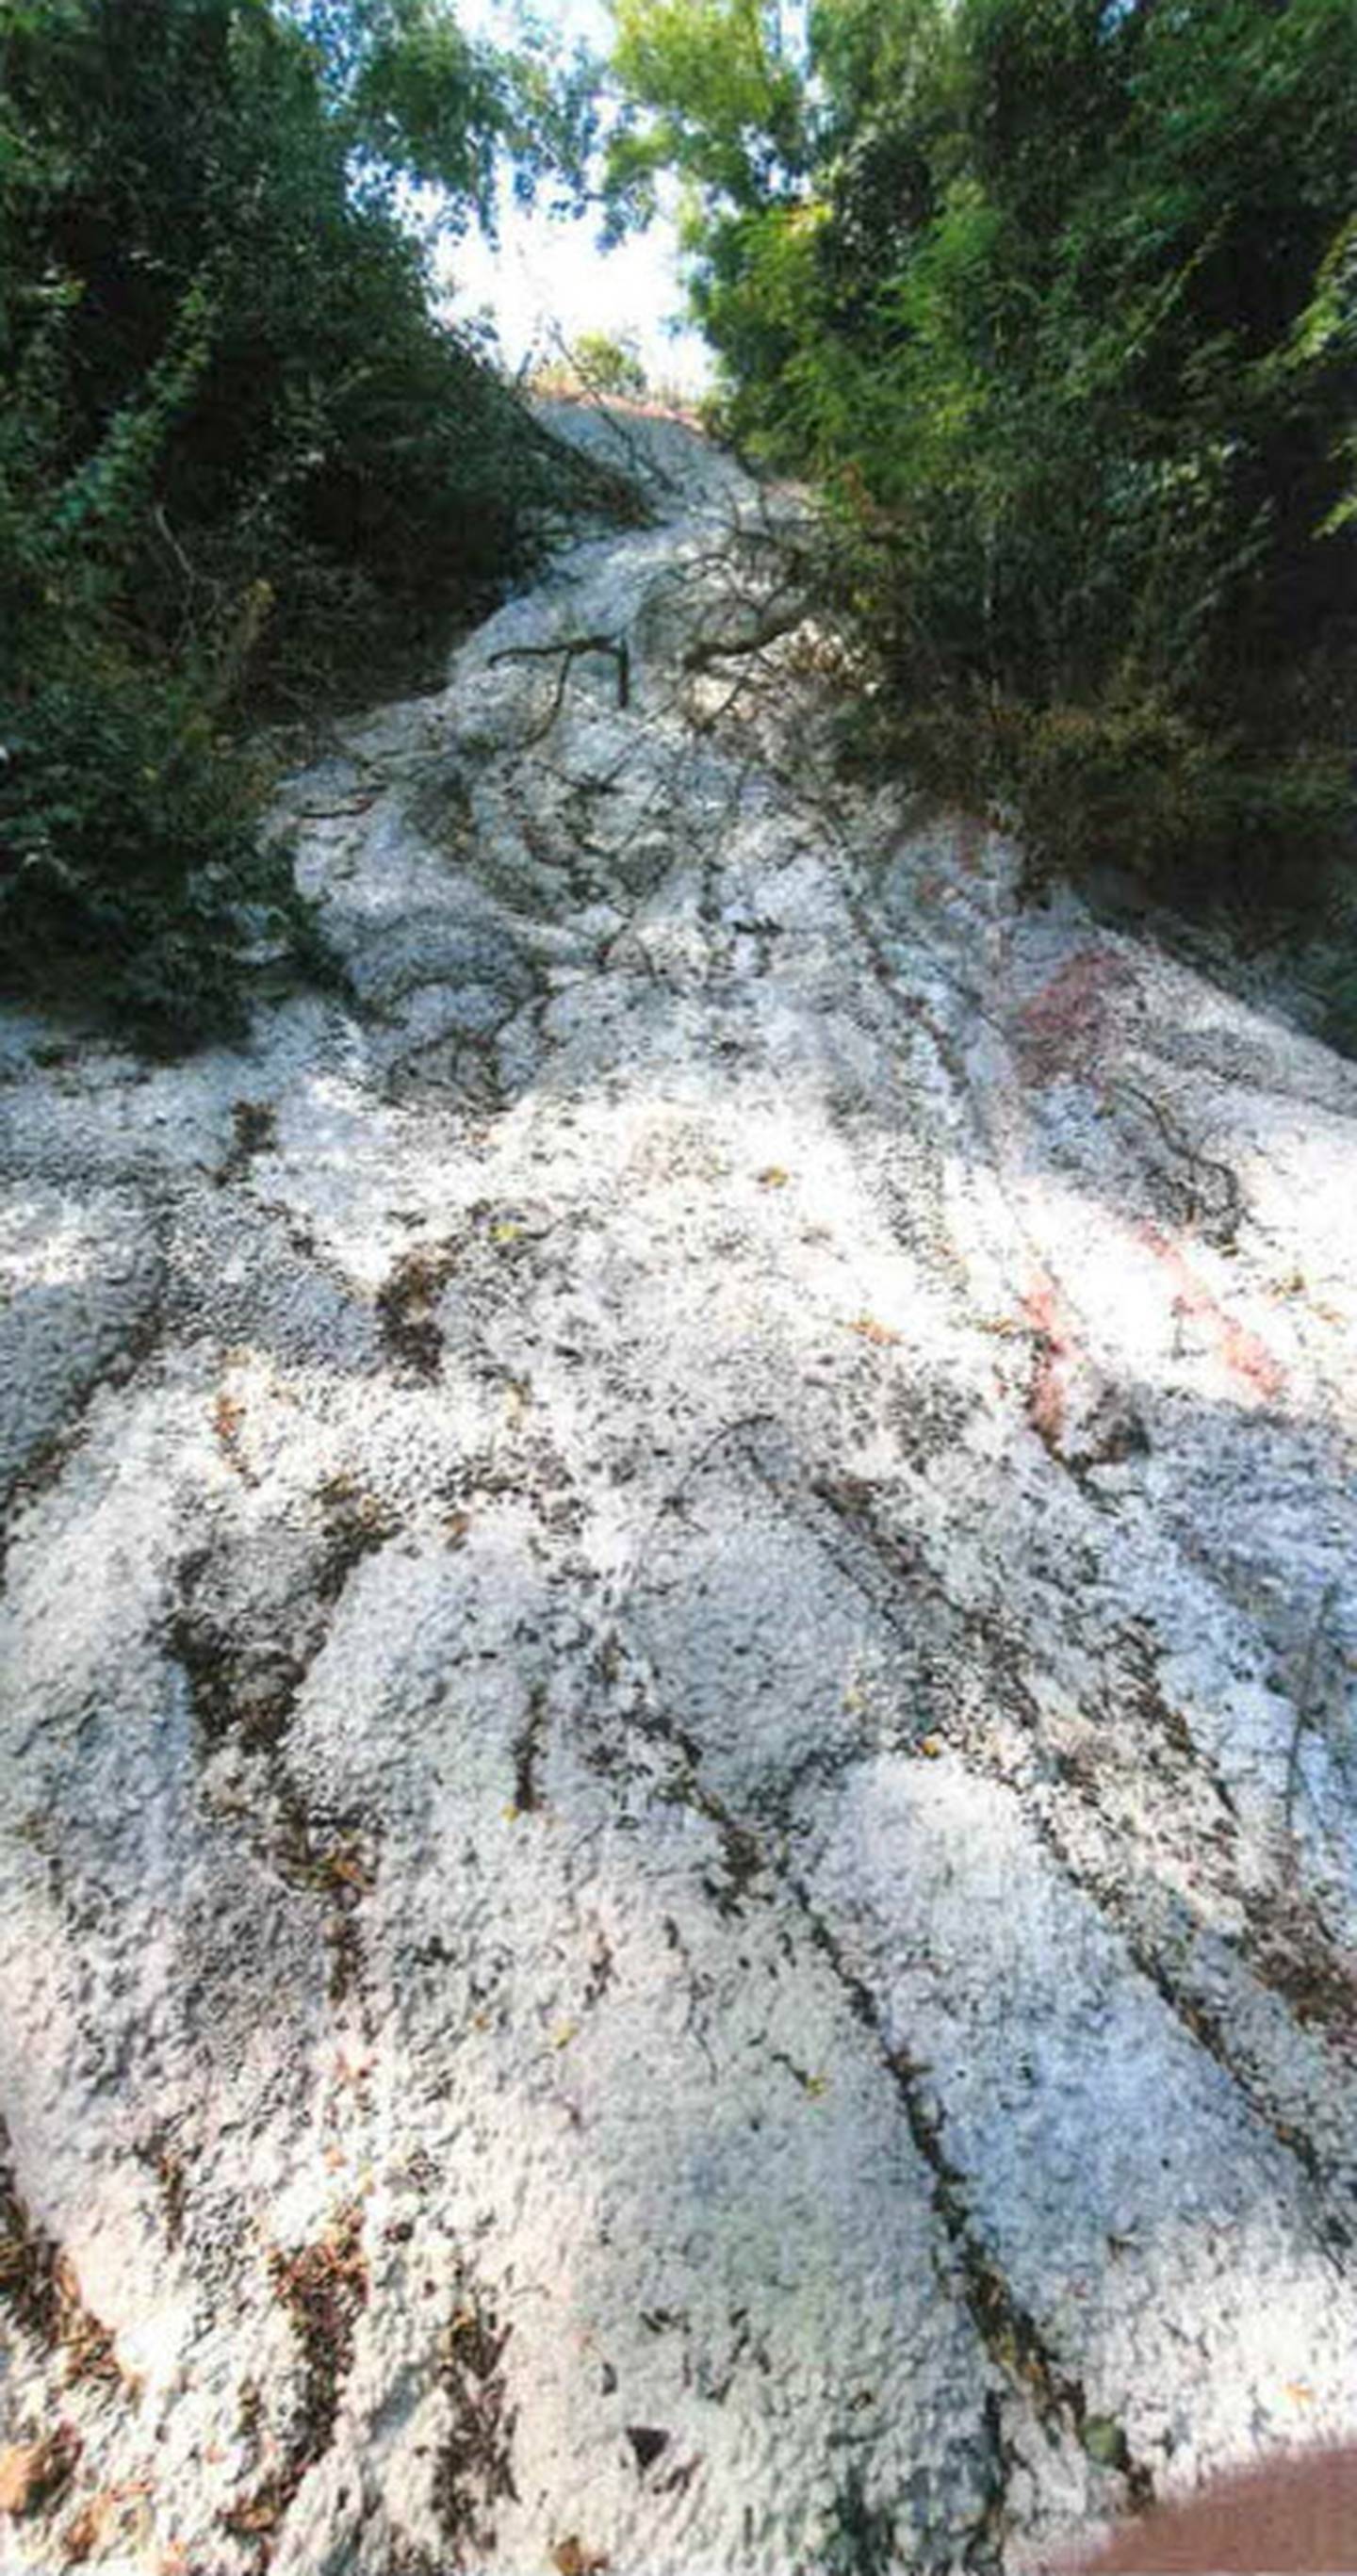 A photo of illegally dumped concrete debris at the ravine near La Salle-Peru High School in Sept. 2021